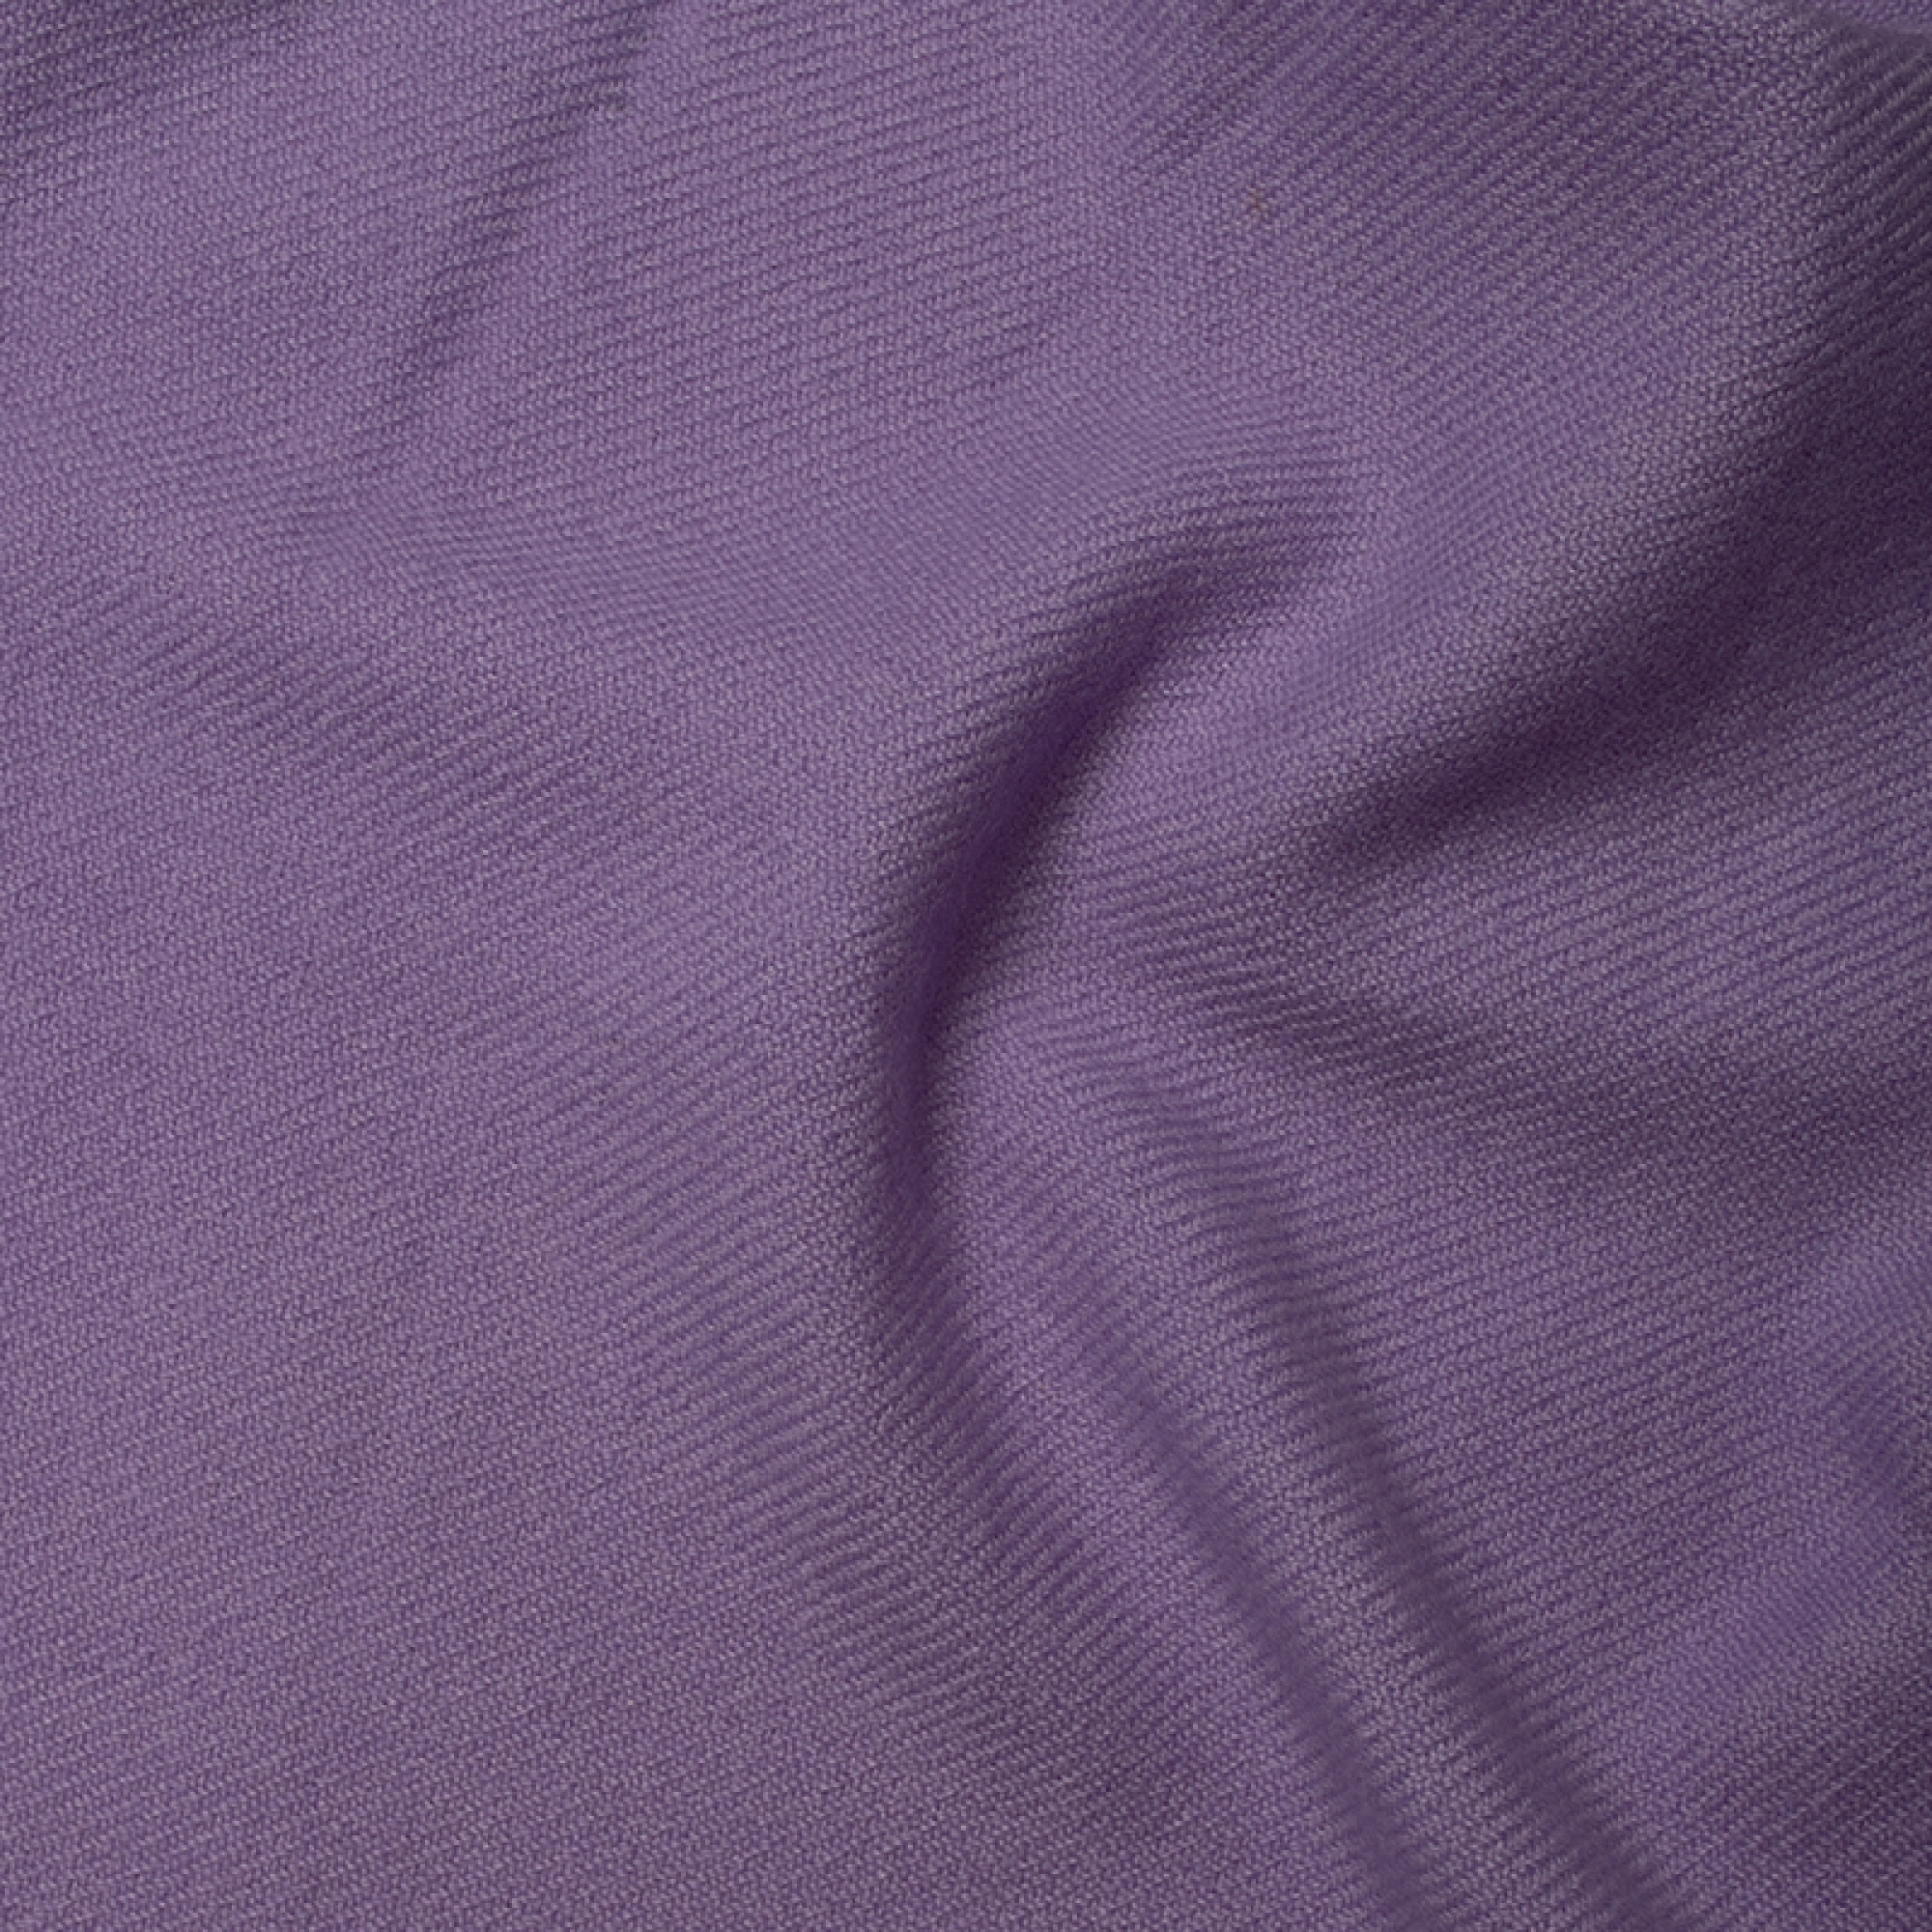 Cashmere accessories blanket toodoo plain m 180 x 220 violet tulip 180 x 220 cm